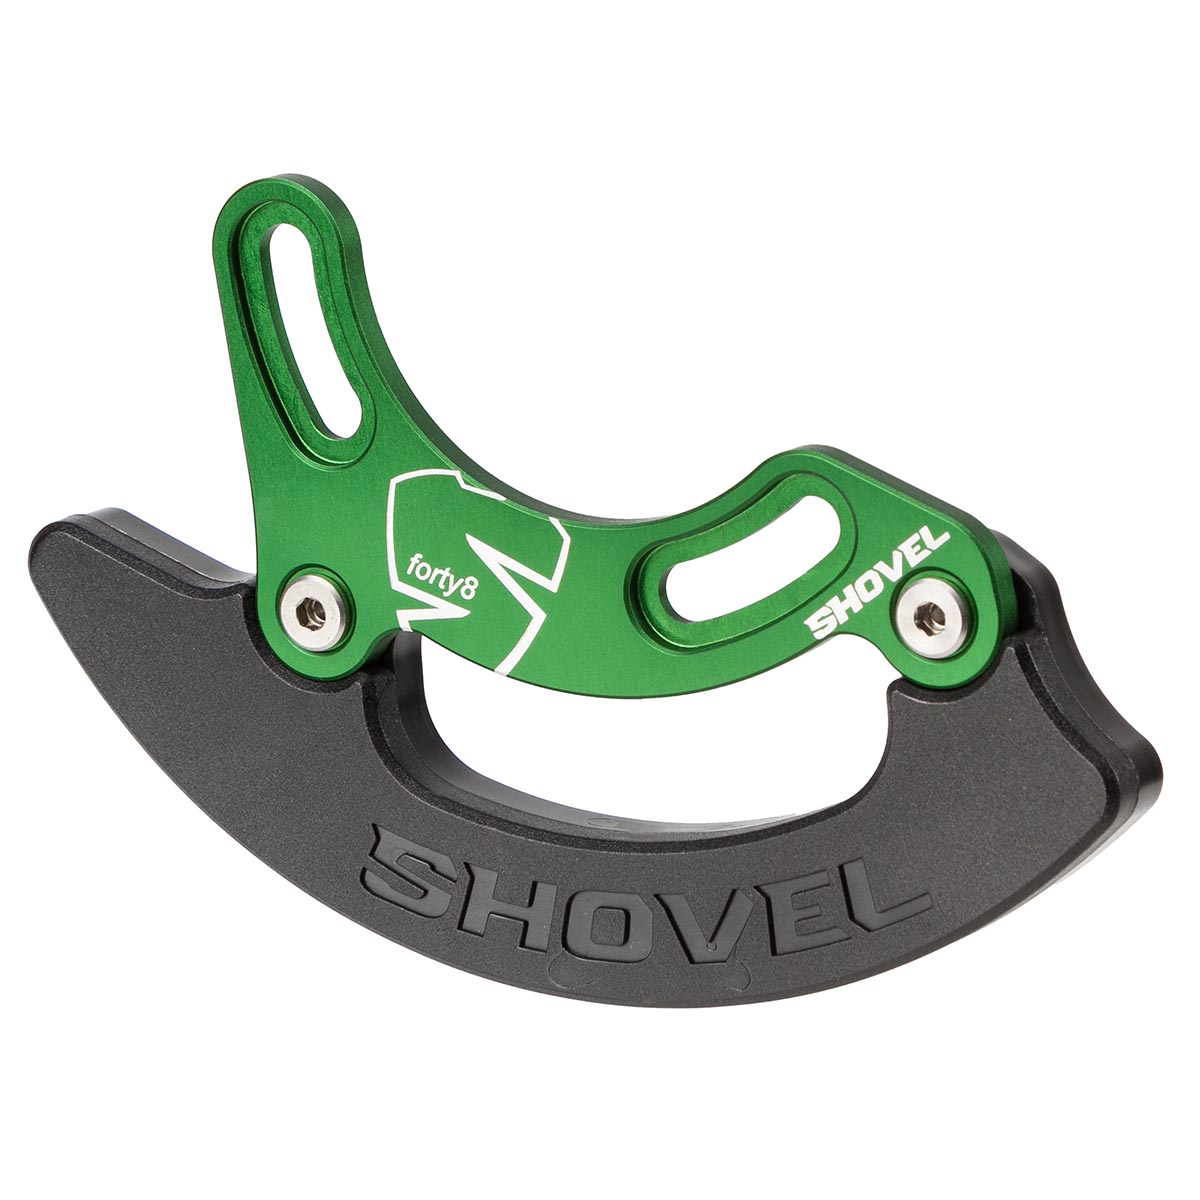 Shovel Guide Chaîne Forty8 Green, 26-34 Teeth, ISCG05